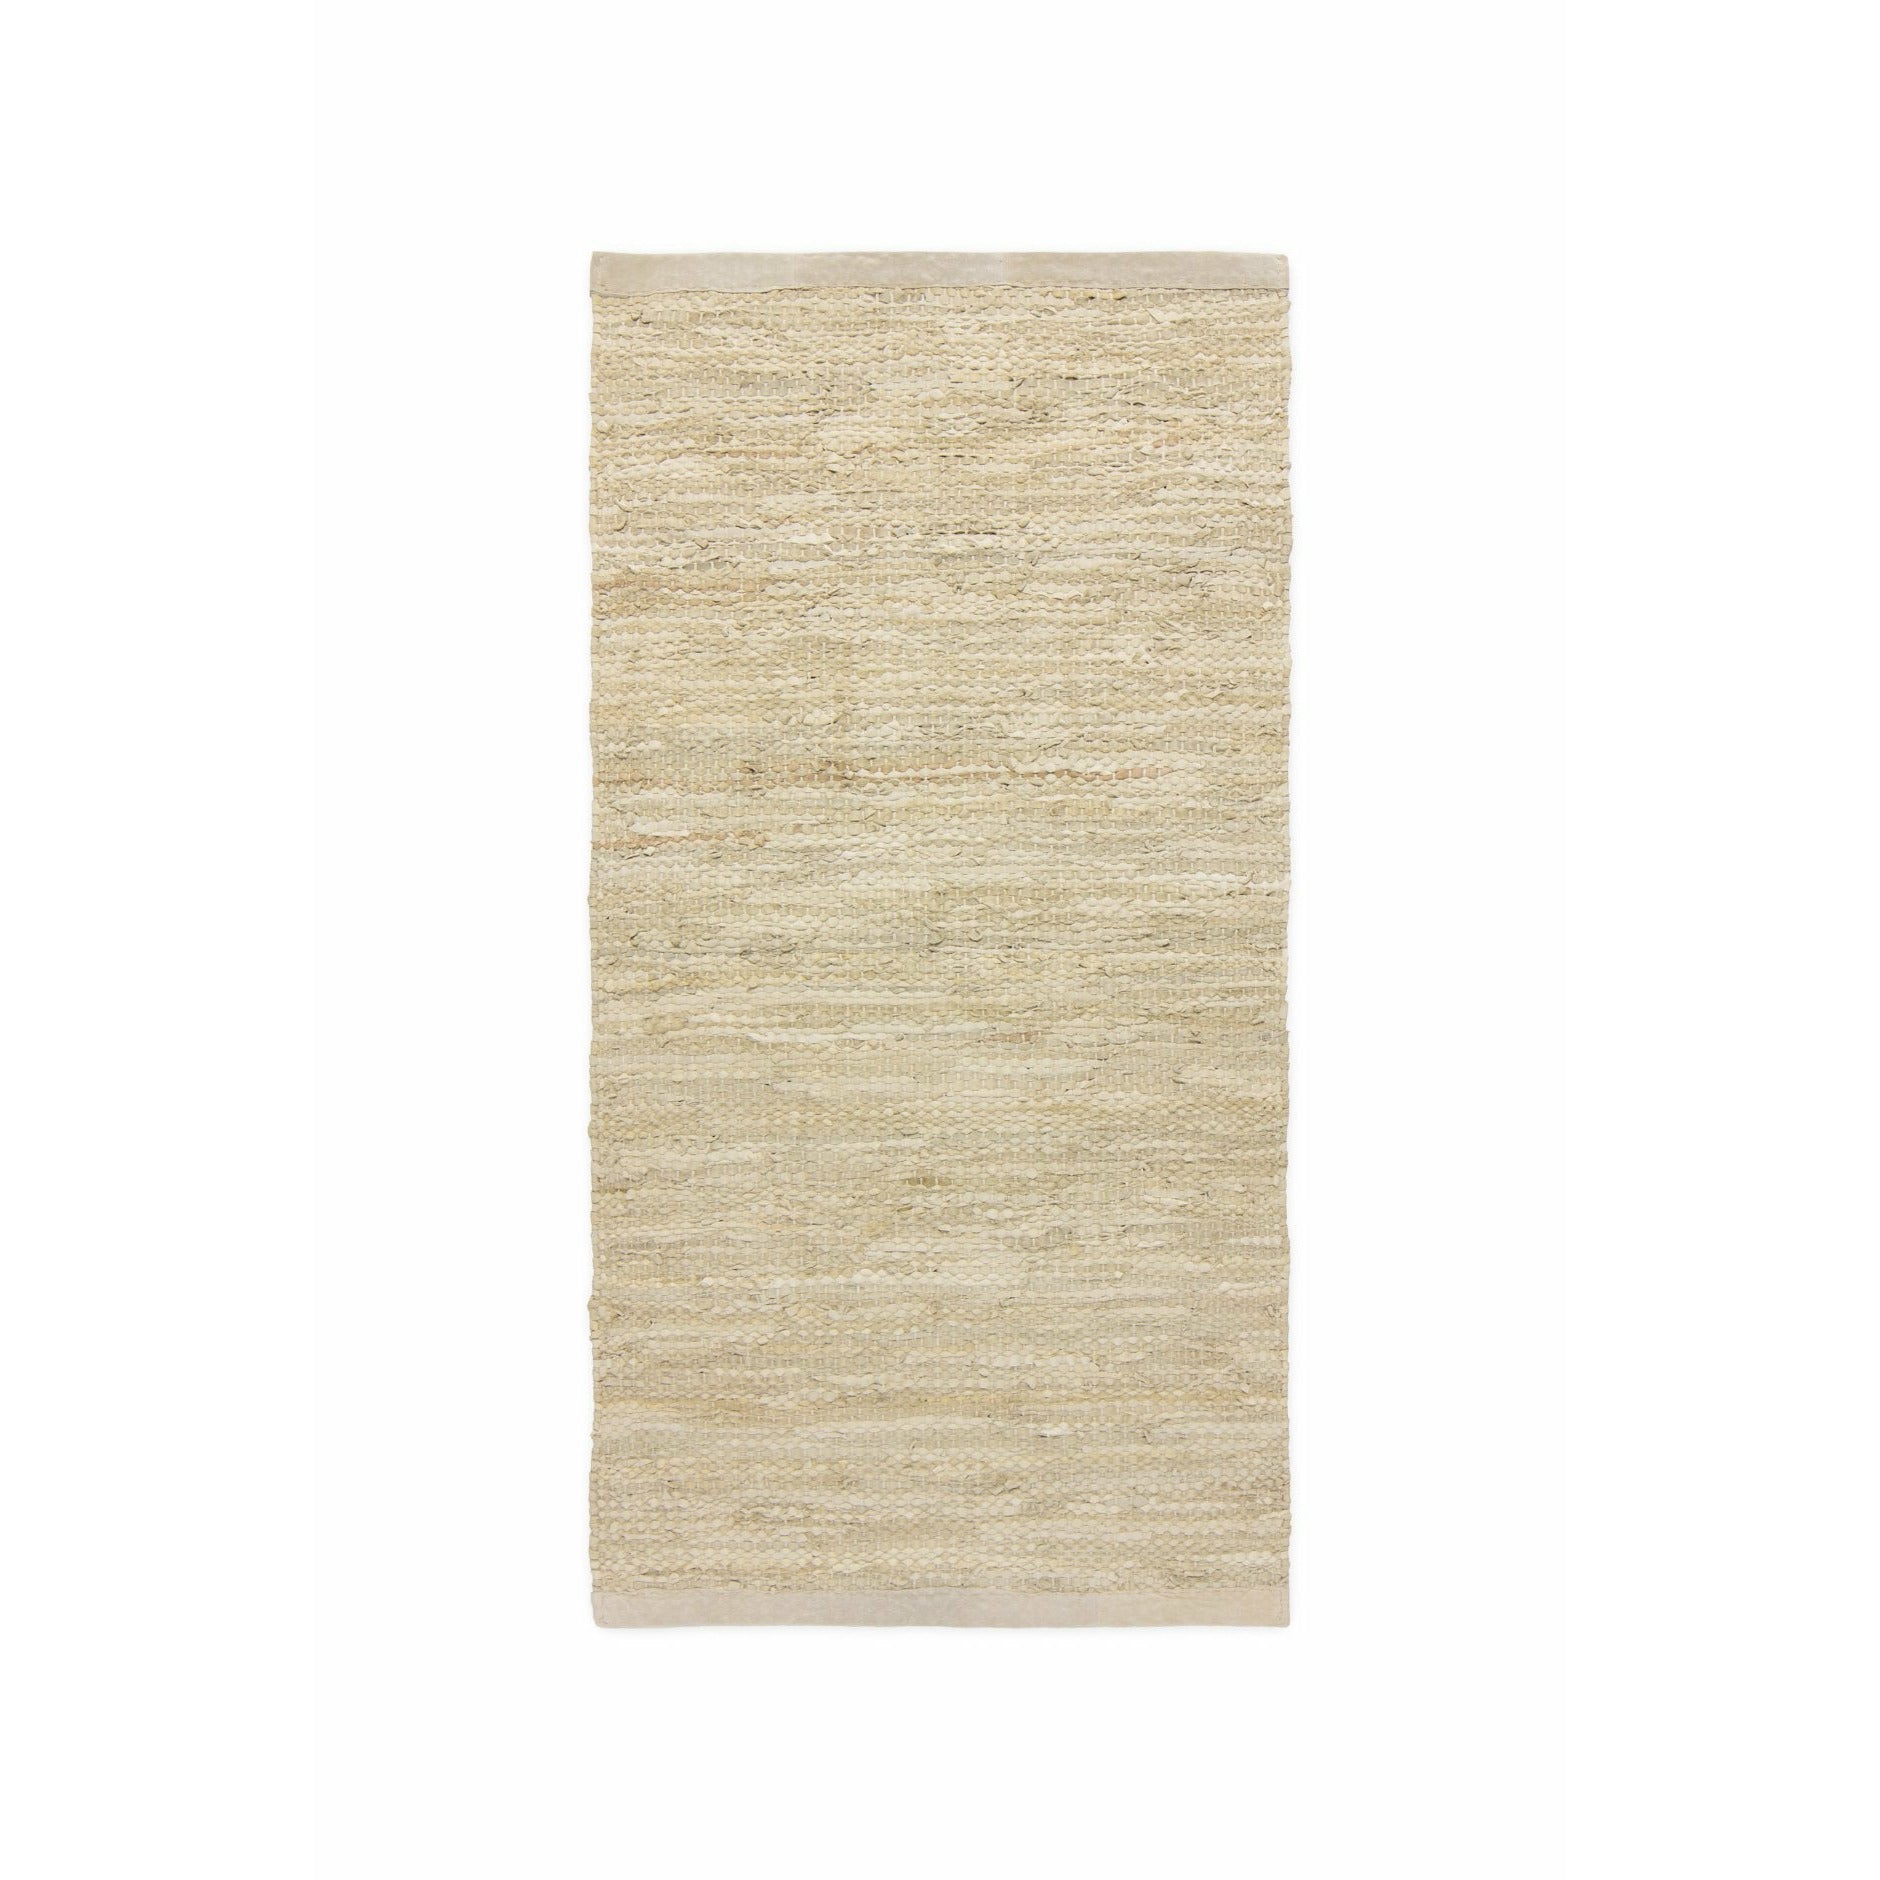 Tappeto in pelle solida beige, 250 x 350 cm